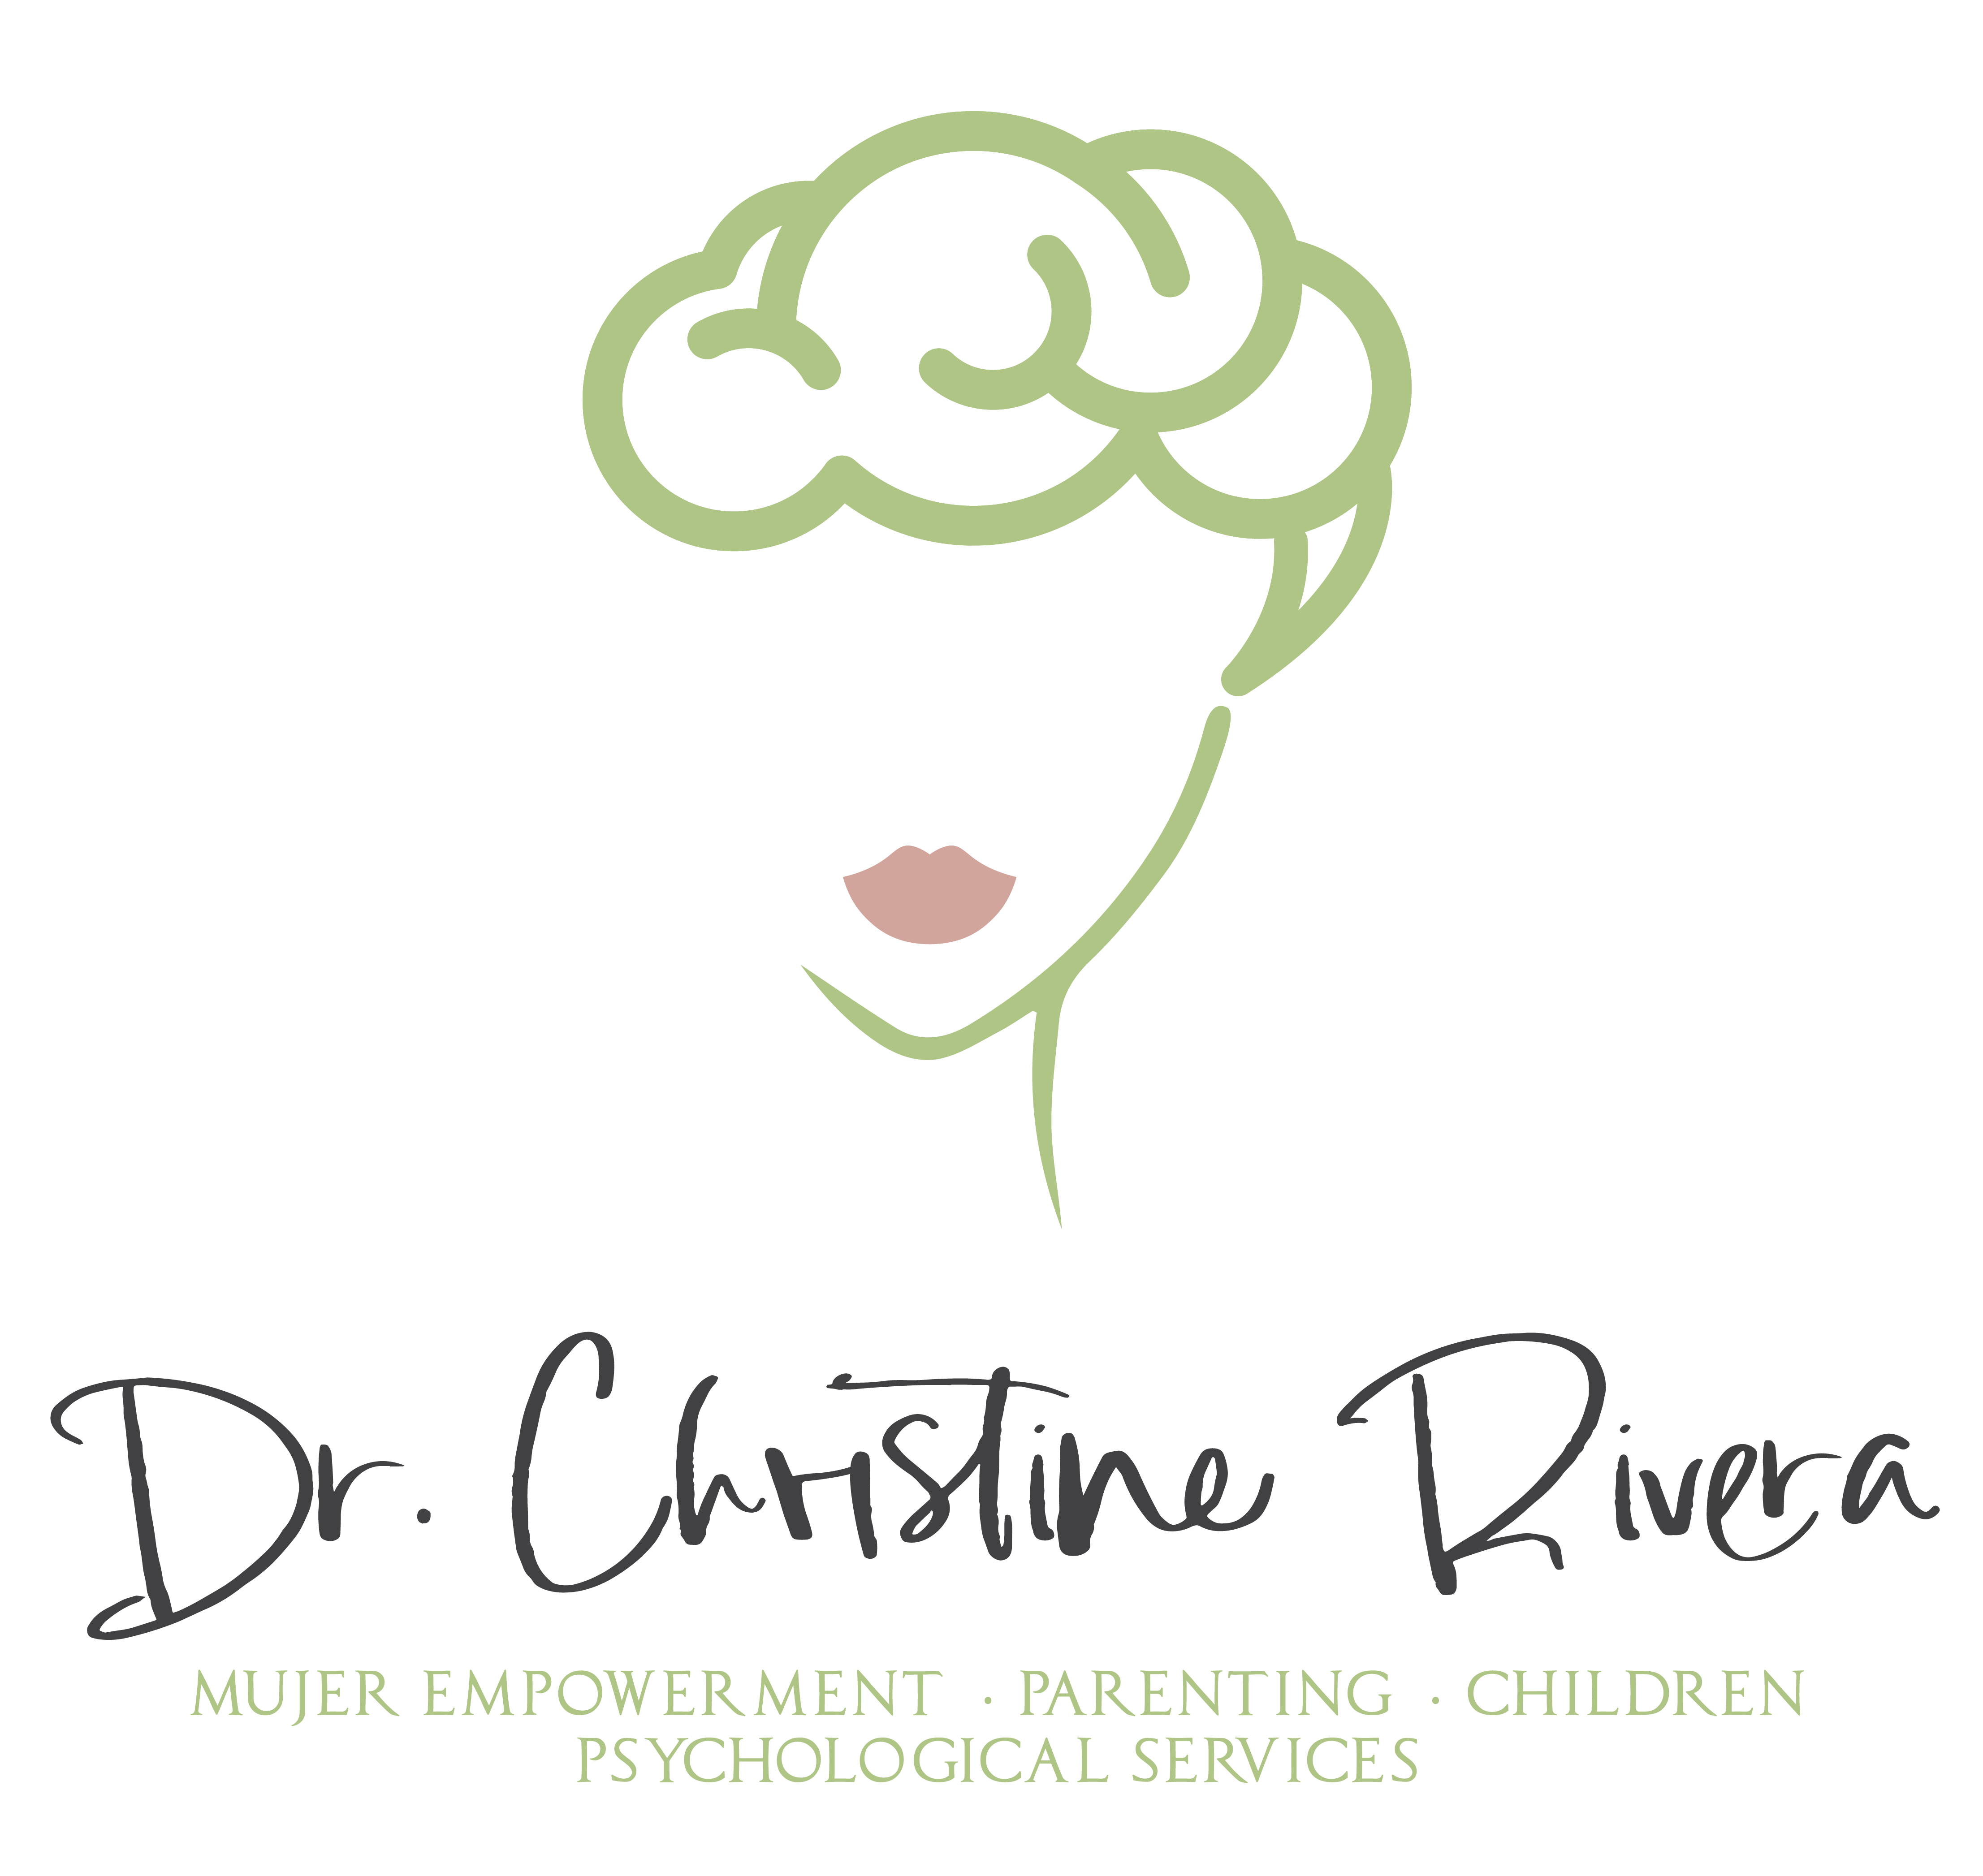 Dr. Christine Rivera Therapy logo